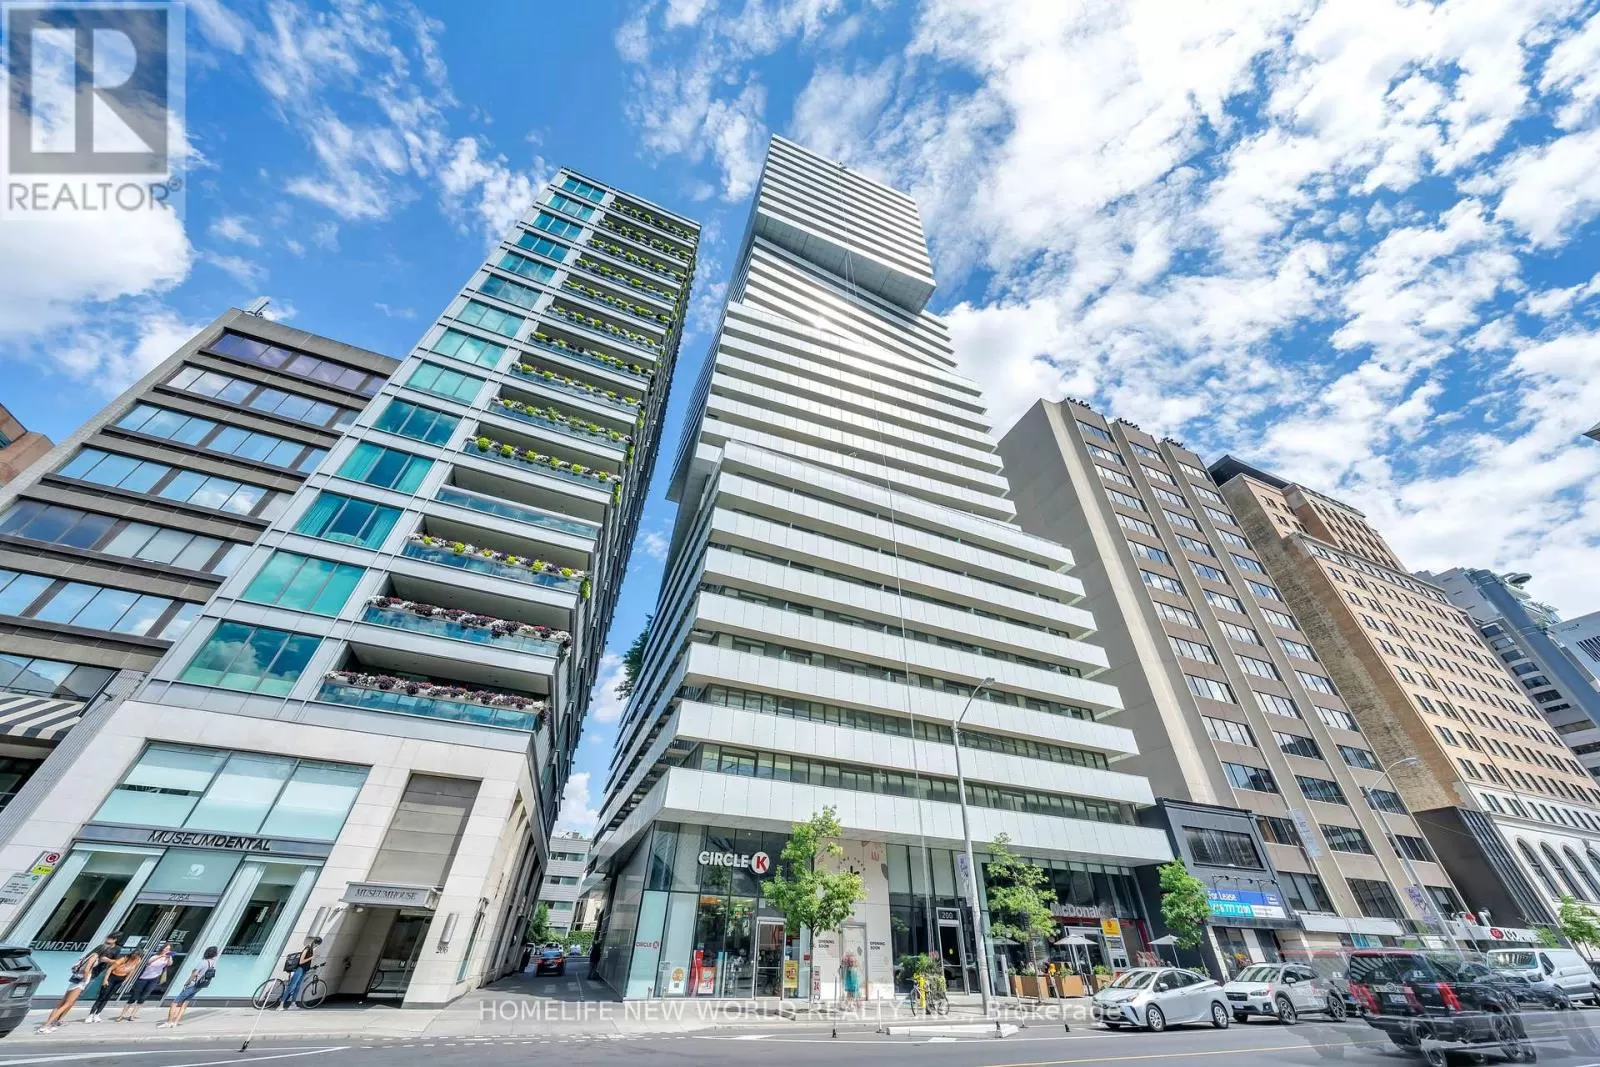 Apartment for rent: 402 - 200 Bloor Street W, Toronto, Ontario M5S 1T8